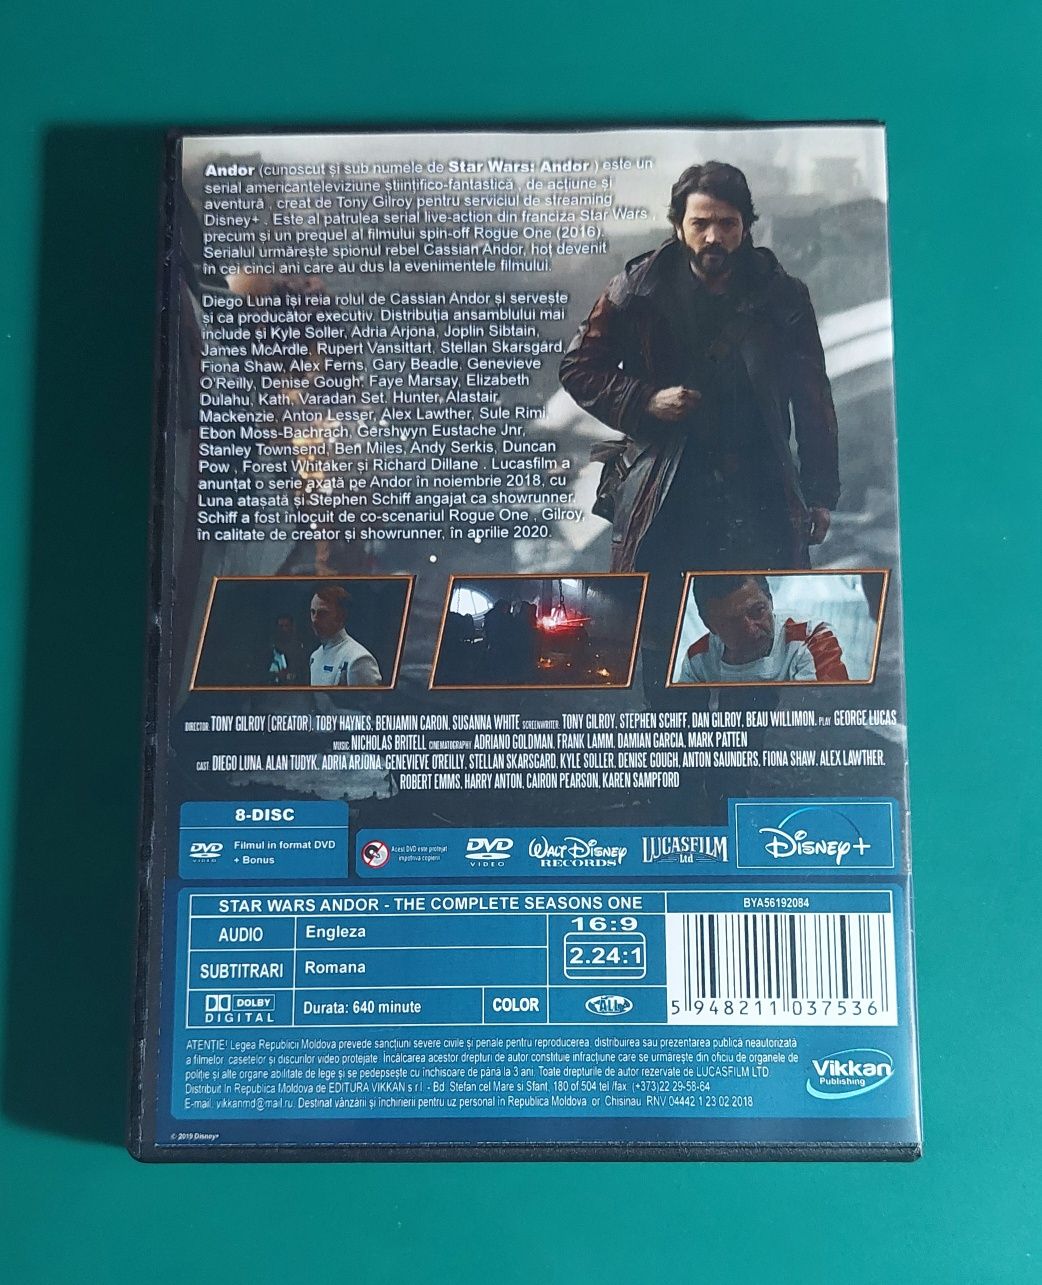 Star Wars: Andor - DVD - Audio engleza subtitrat in romana